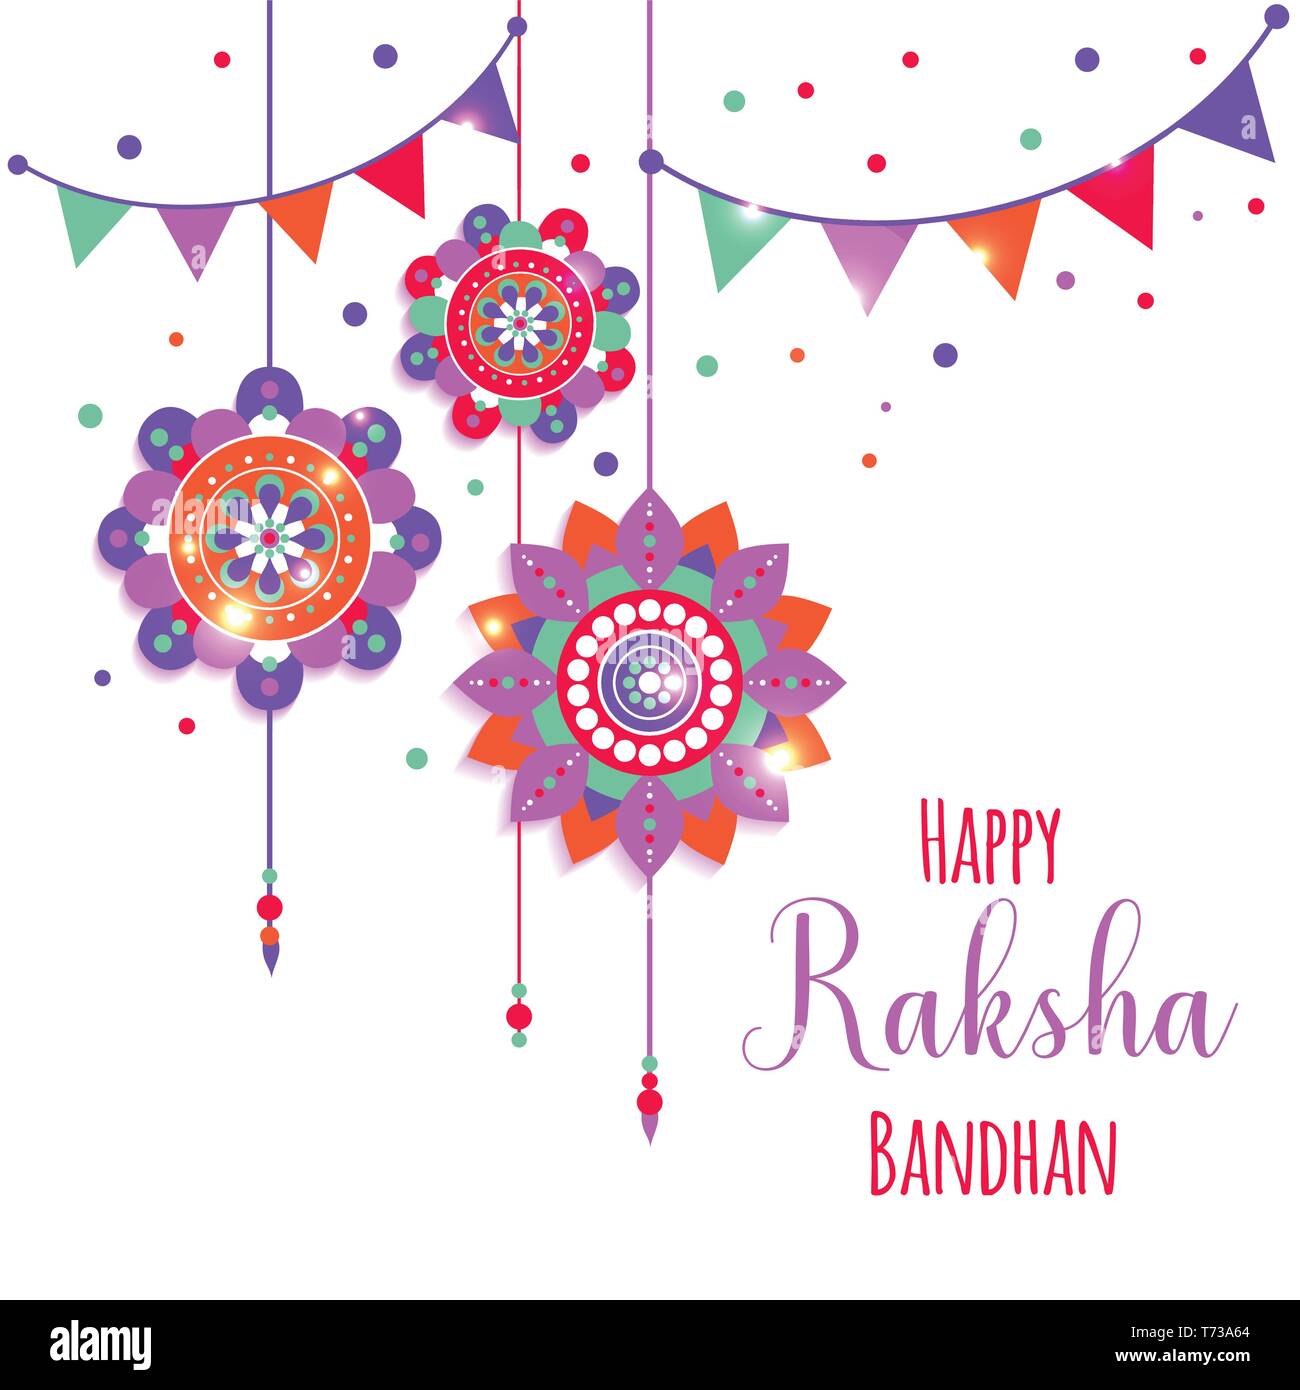 A graphic design for an Indian festival - Raksha Bandhan Stock ...